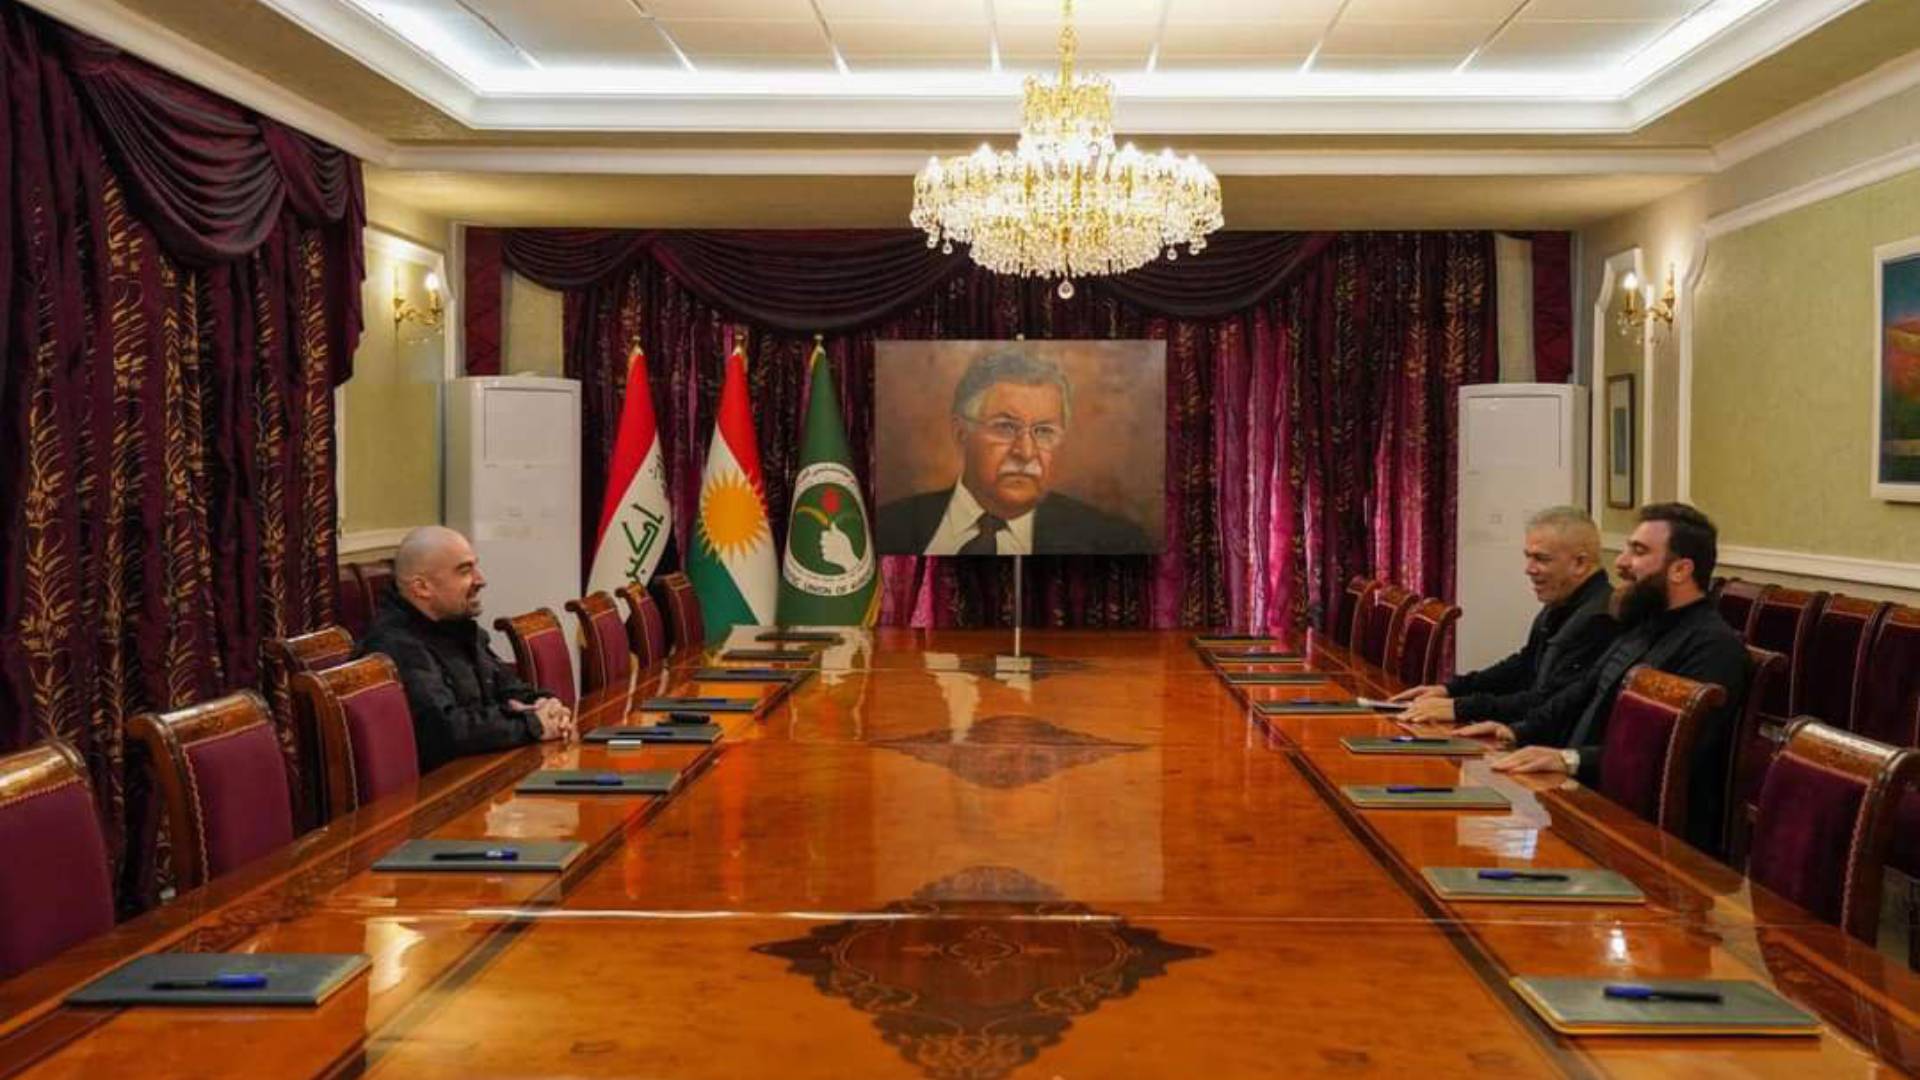  President Bafel meets Rayan al-Kildani at Dabashan